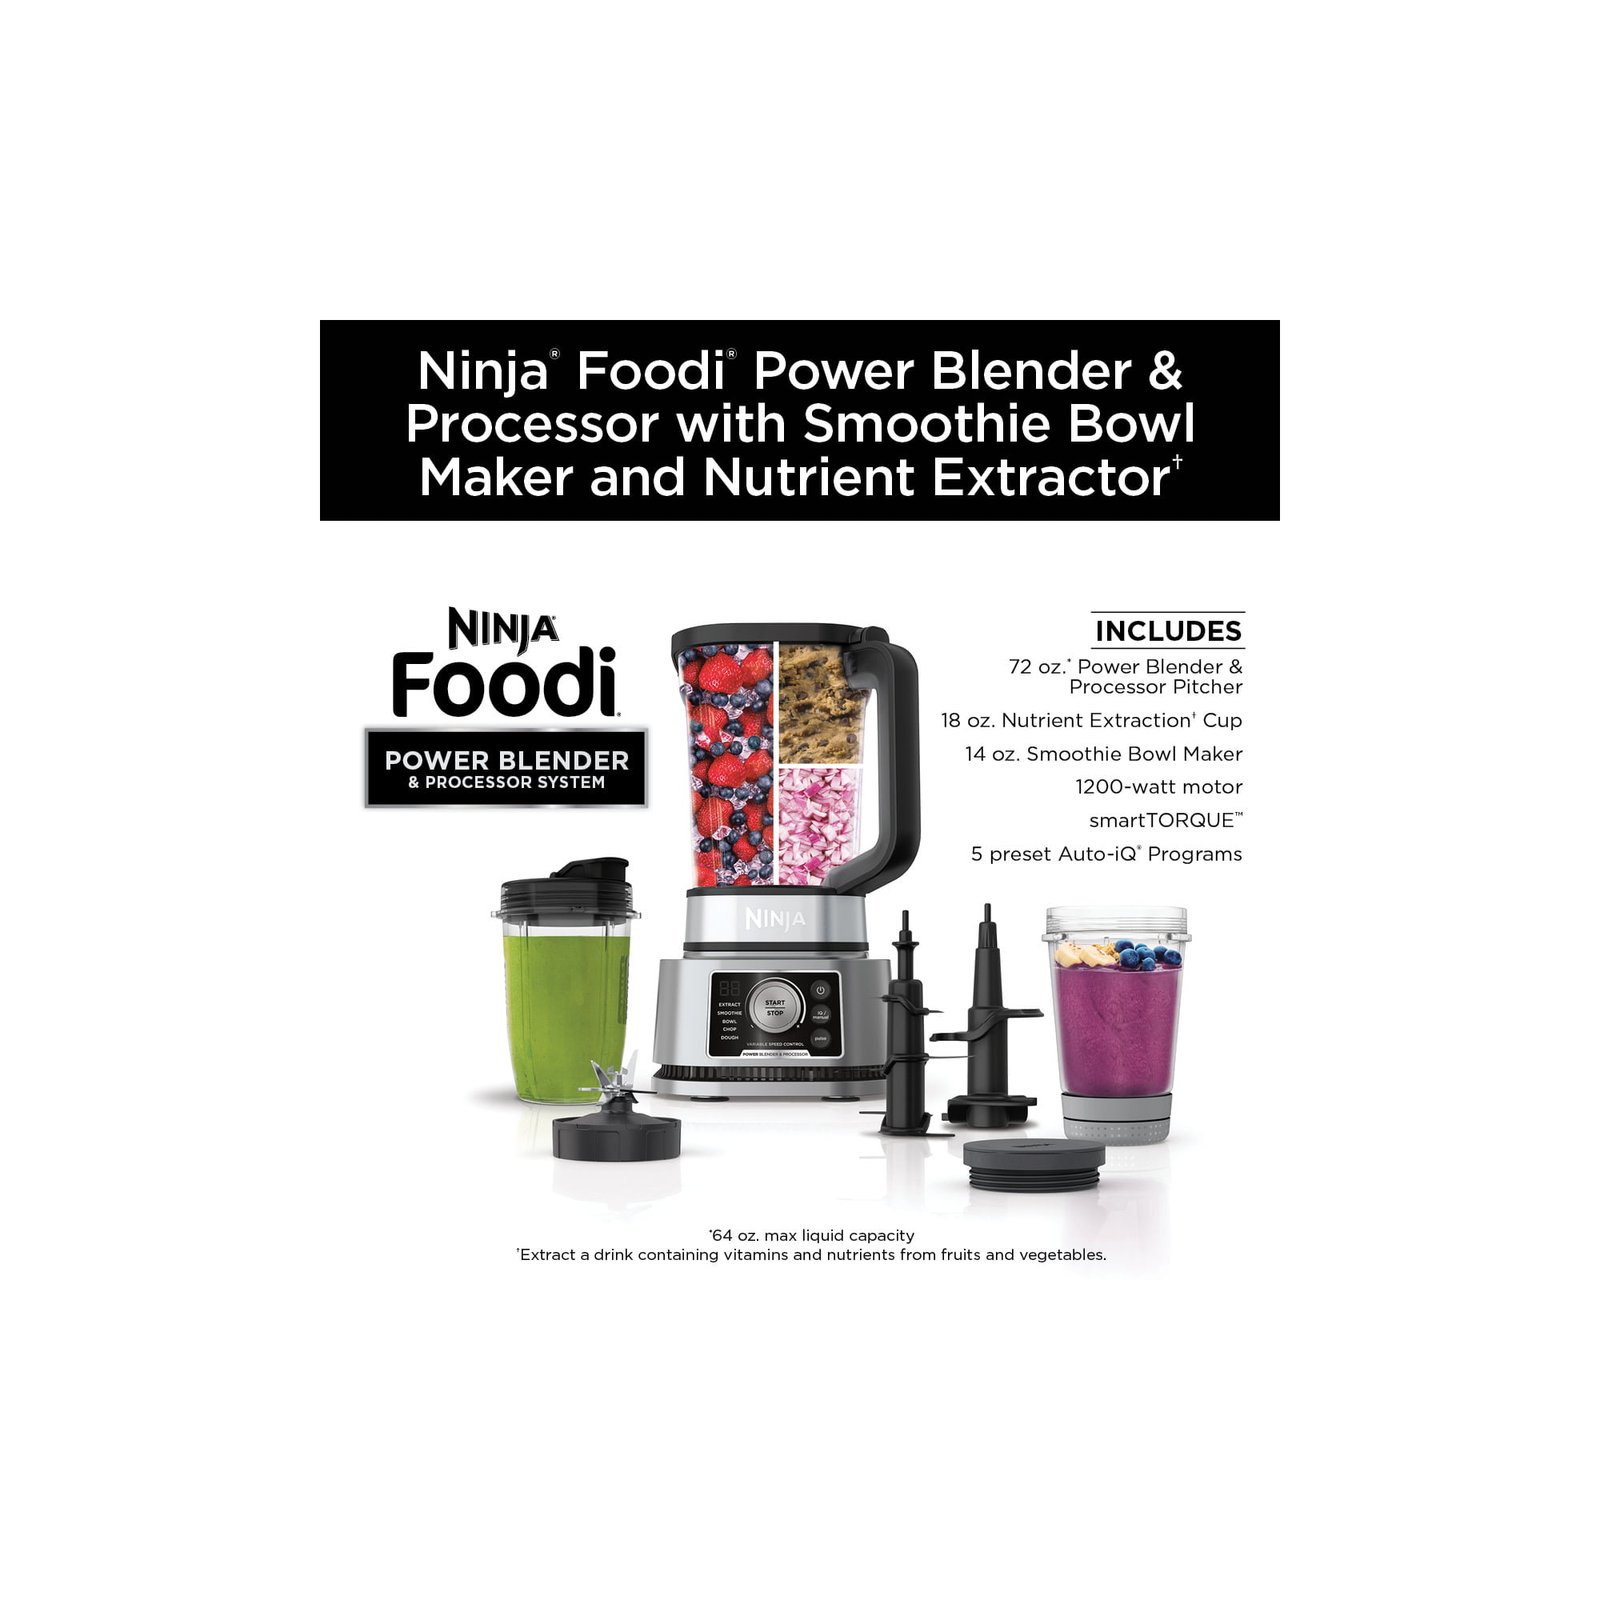 Ninja Foodi Power Blender & Processor System